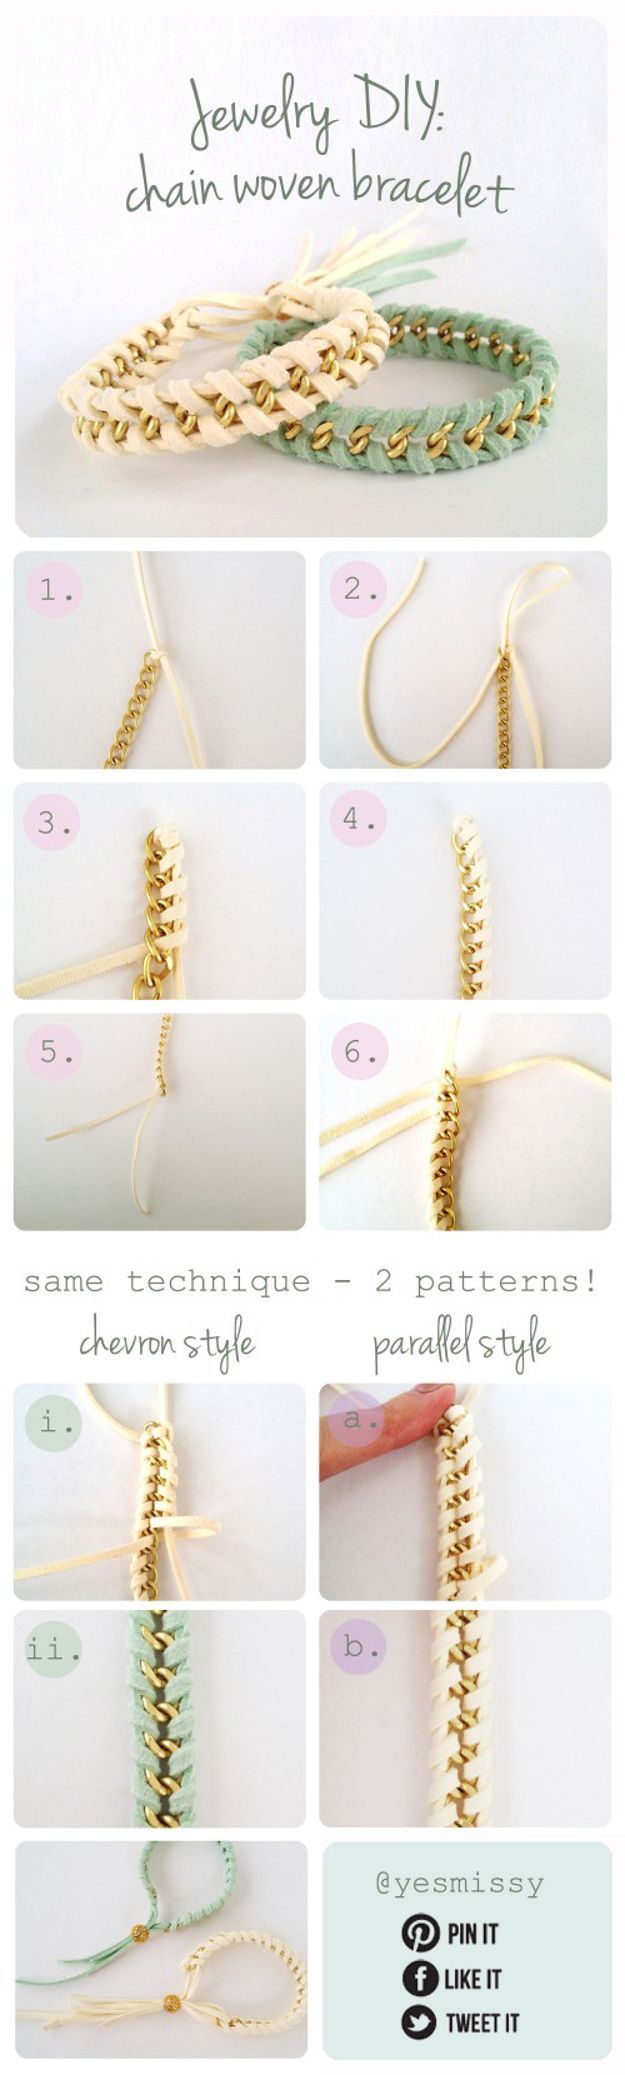 DIY Braided Bracelets | Just follow the step by step instructions to create this cute bracelets. #DiyReady www.diyready.com